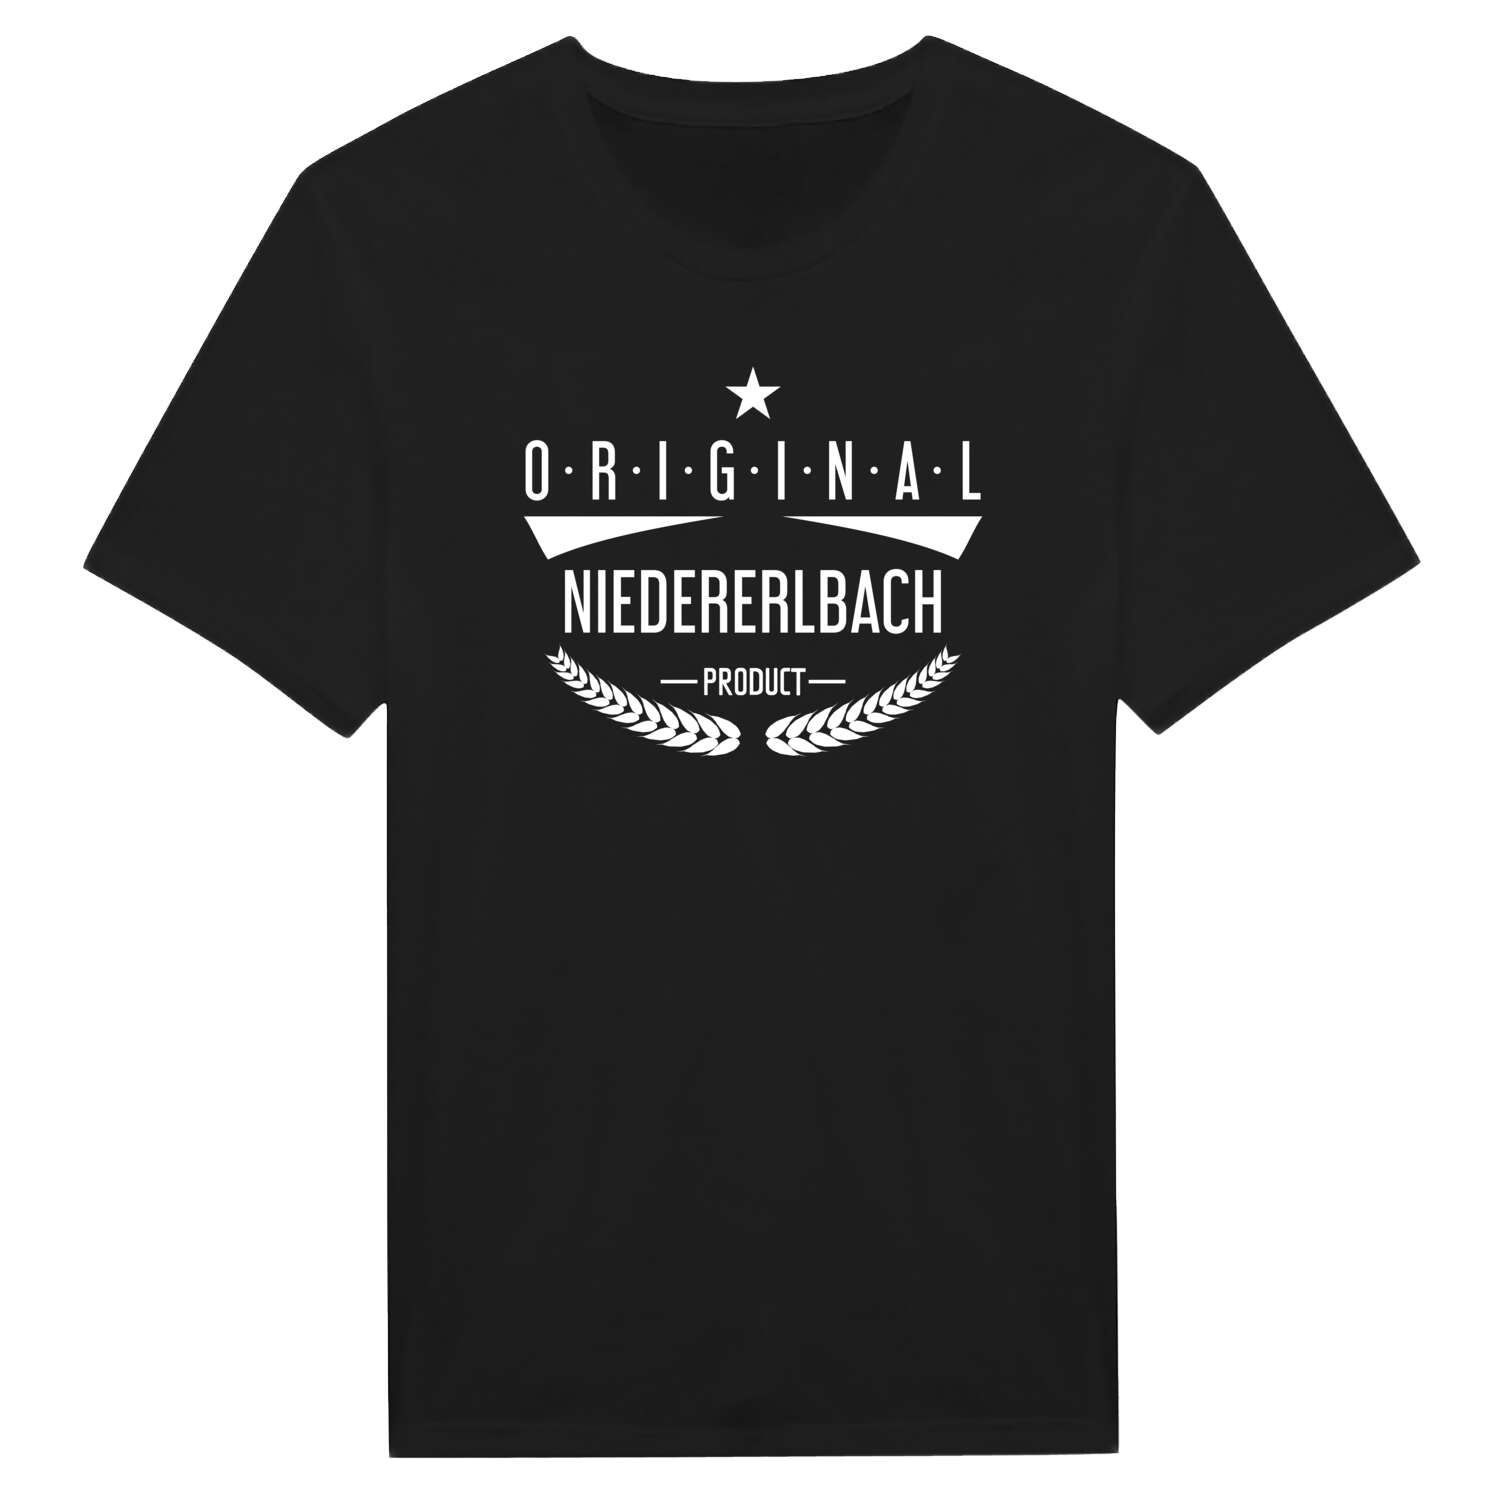 Niedererlbach T-Shirt »Original Product«